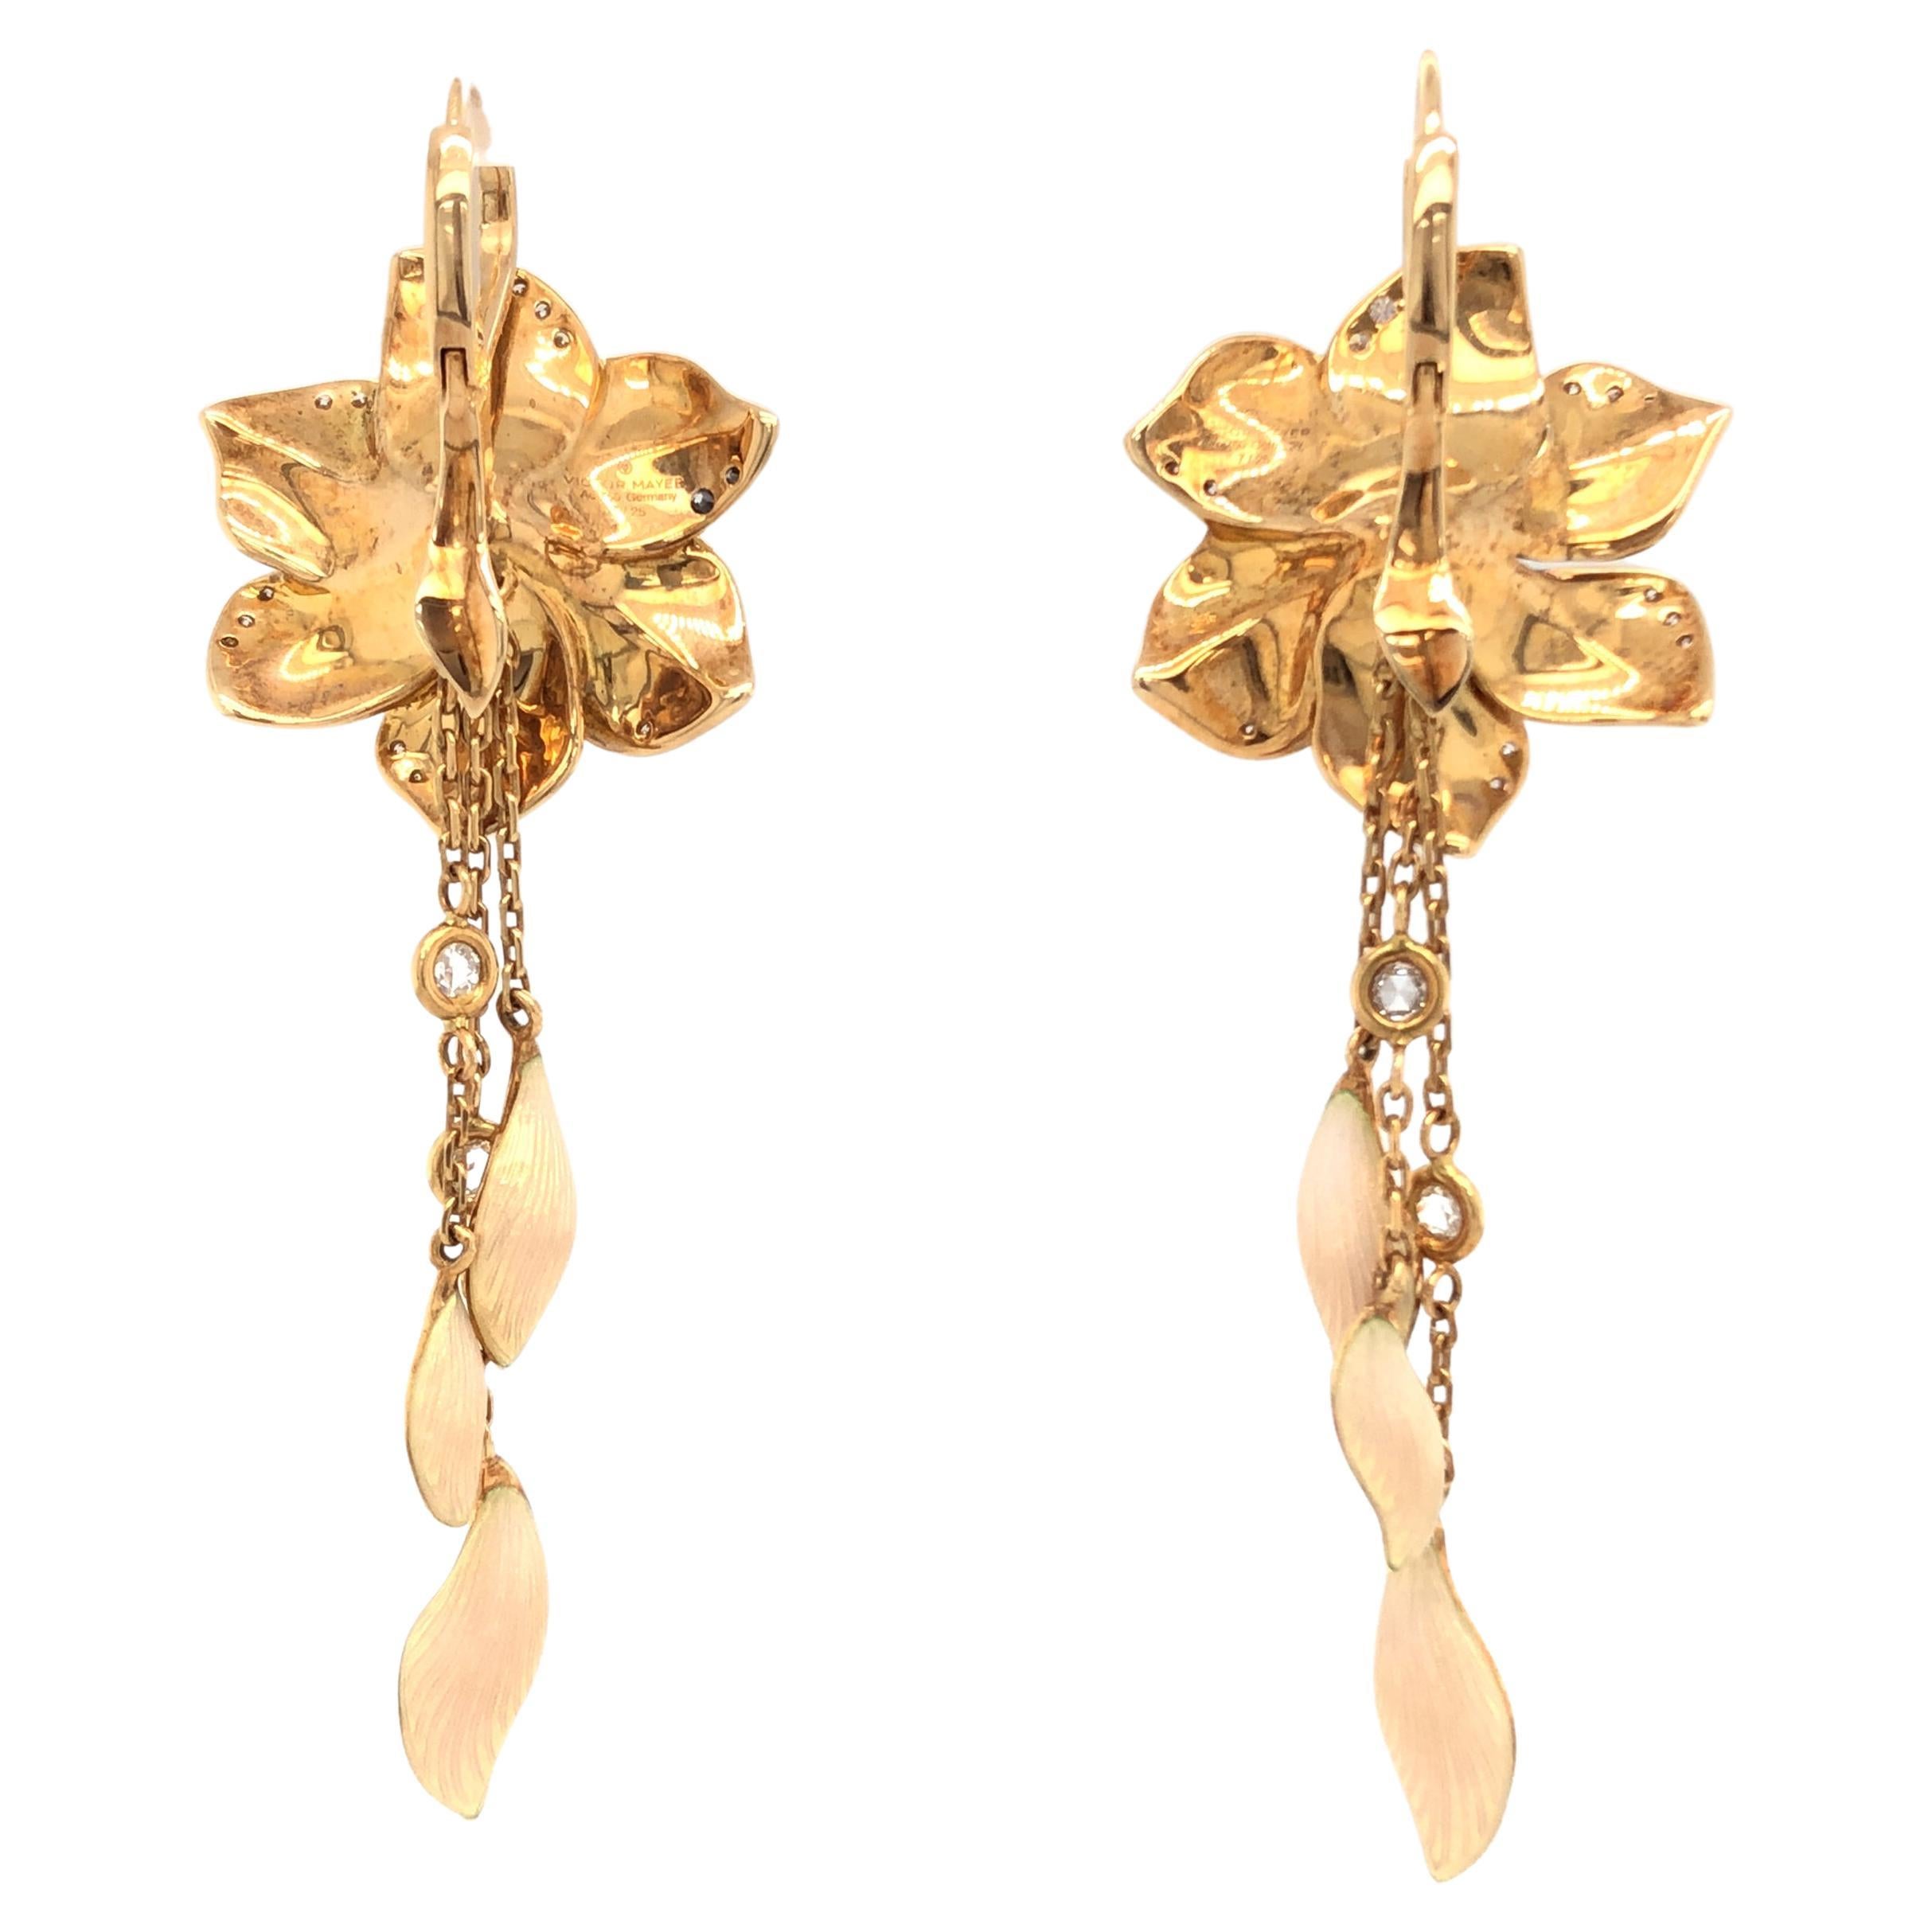 Brilliant Cut Senerade Earrings, 18k Yellow Gold, Opalescent Pink Enamel 62 Diamonds 0.74 Ct For Sale